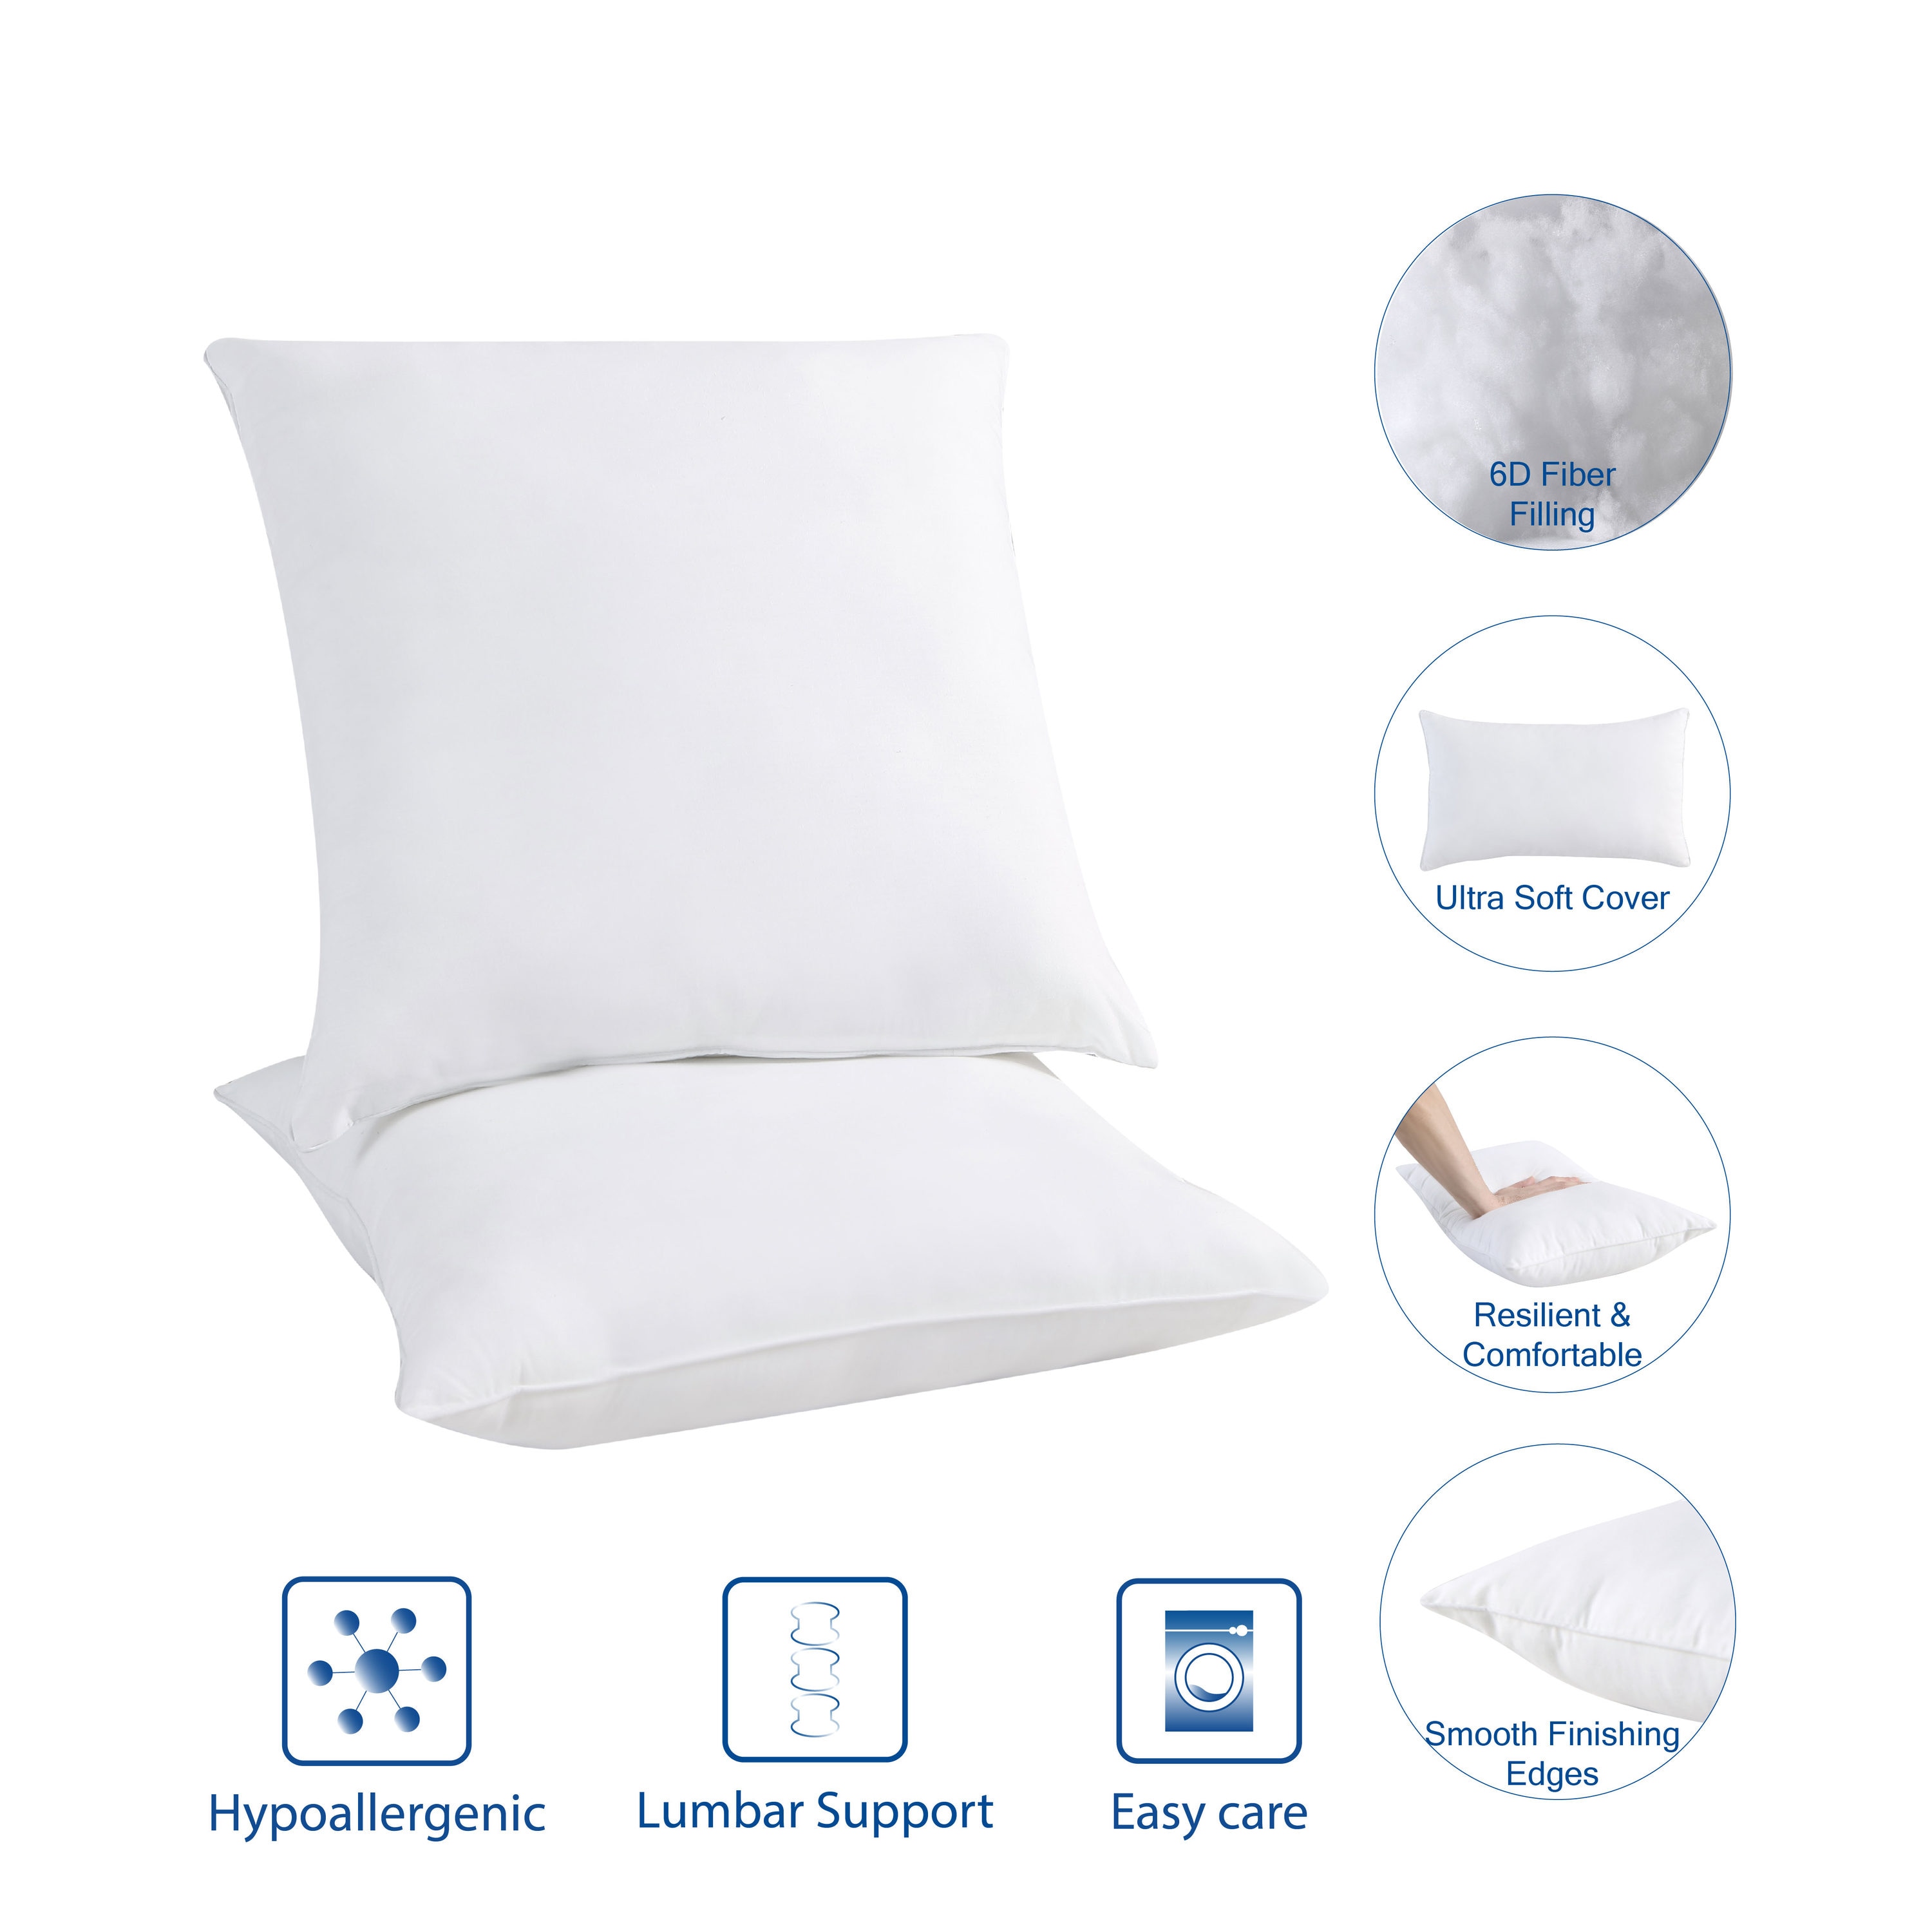 Pillow Inserts, Down Pillow Inserts, Indoor Cushion Insert, Lumbar